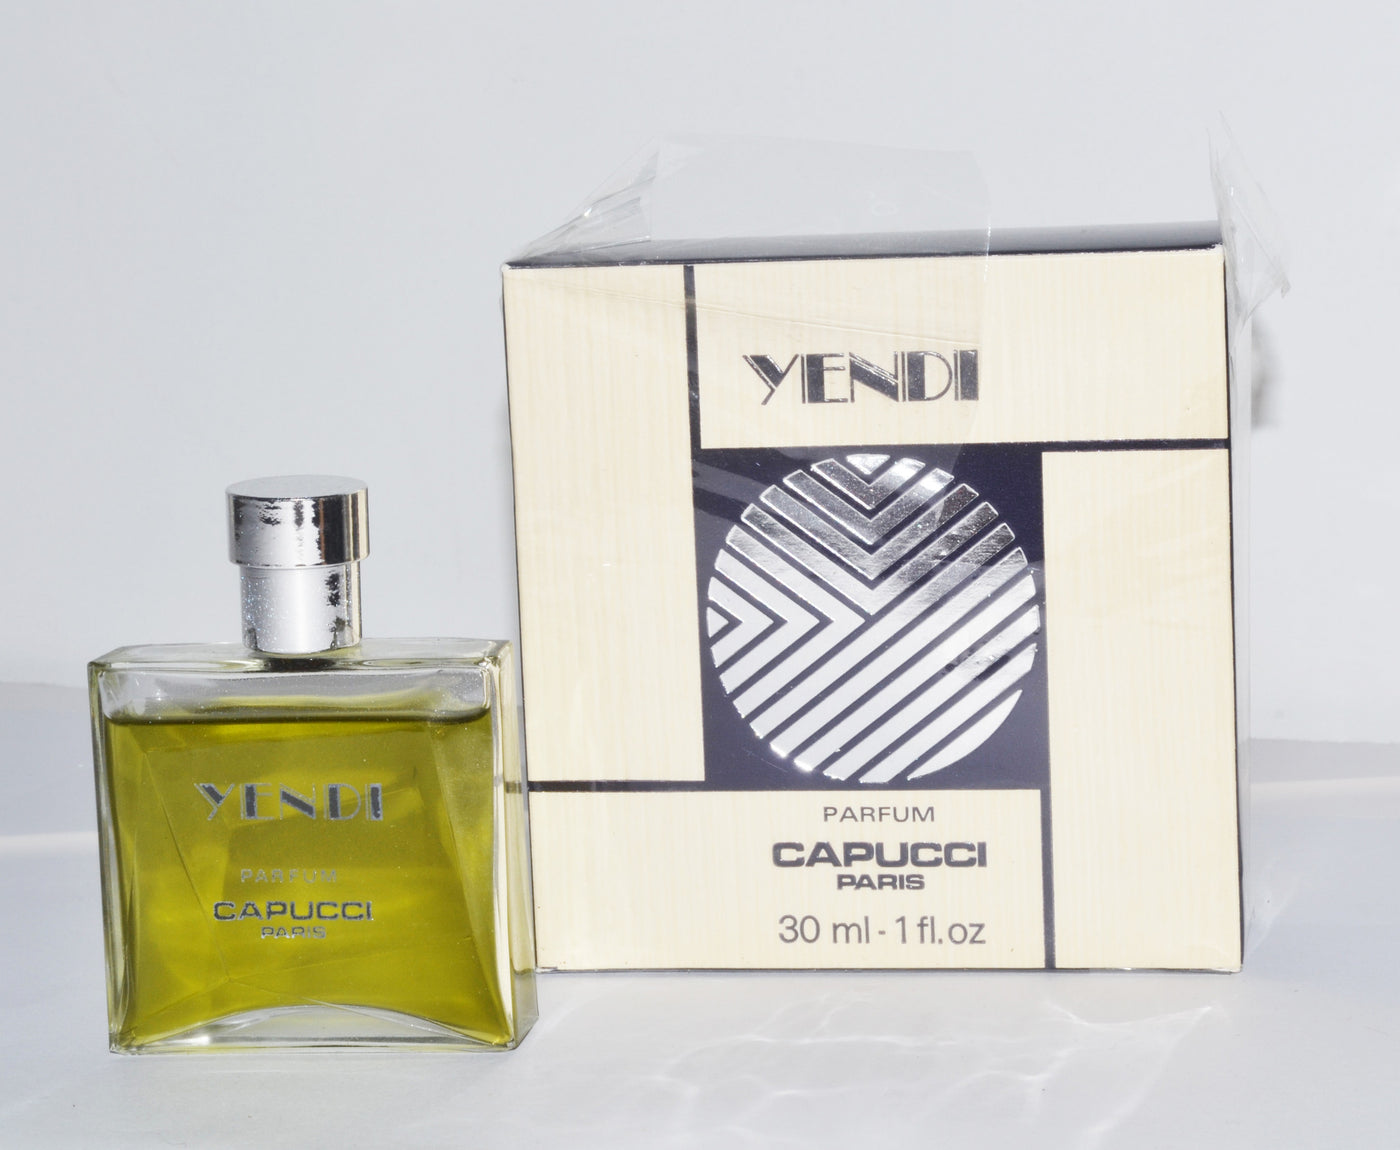 Vintage Yendi Parfum By Capucci 